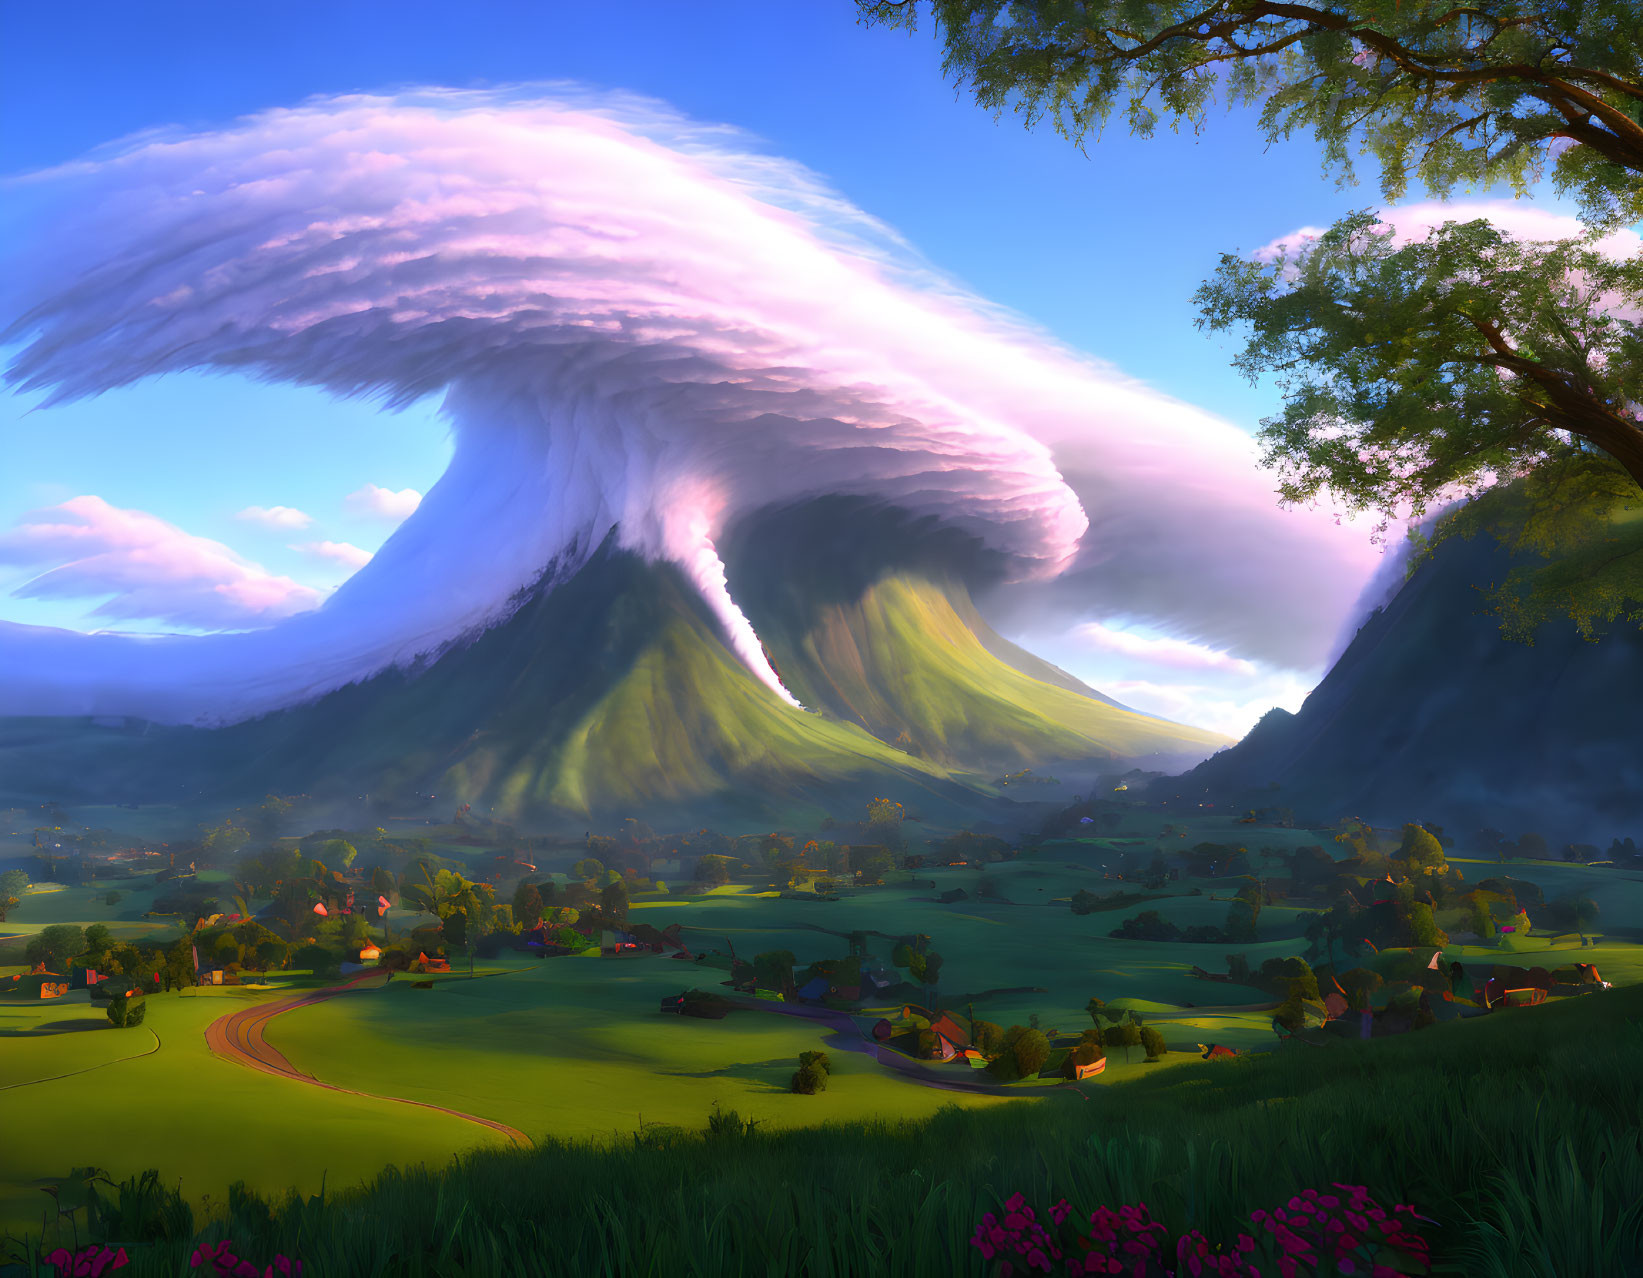 Fantasy landscape with village under towering wave-like cloud formation